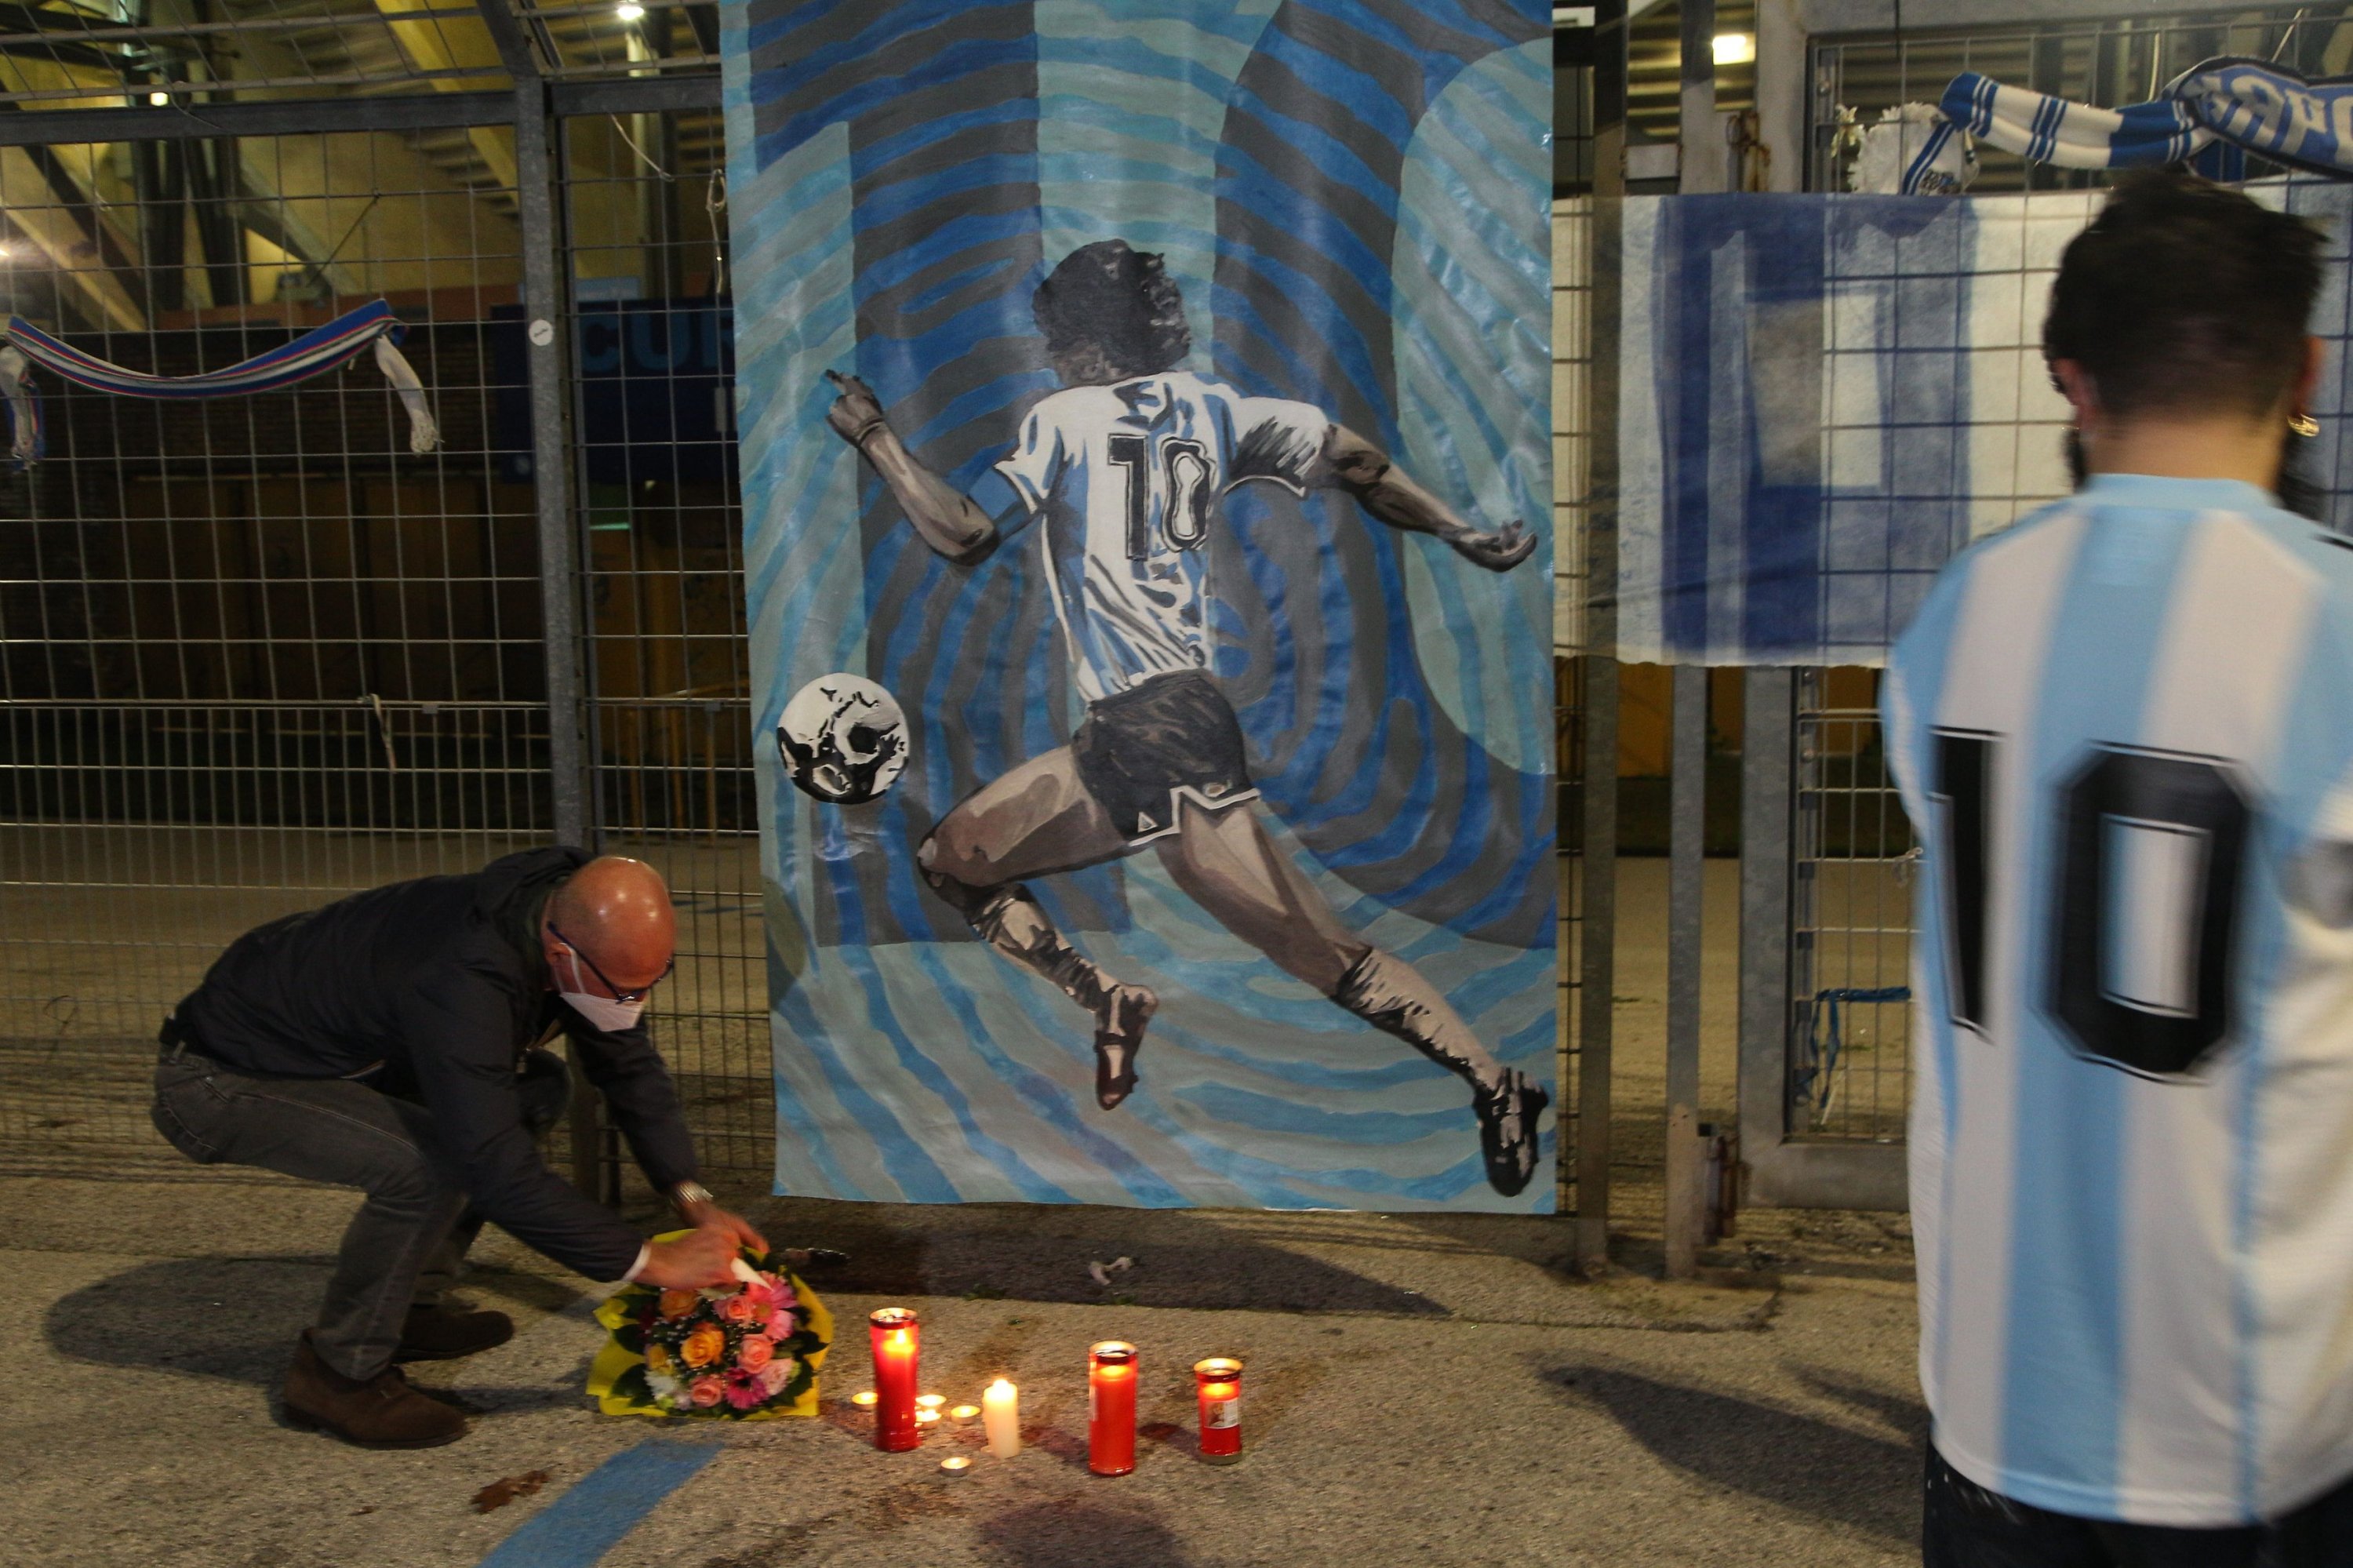 Diego Maradona: Pele mourns death of Argentina, Barcelona and